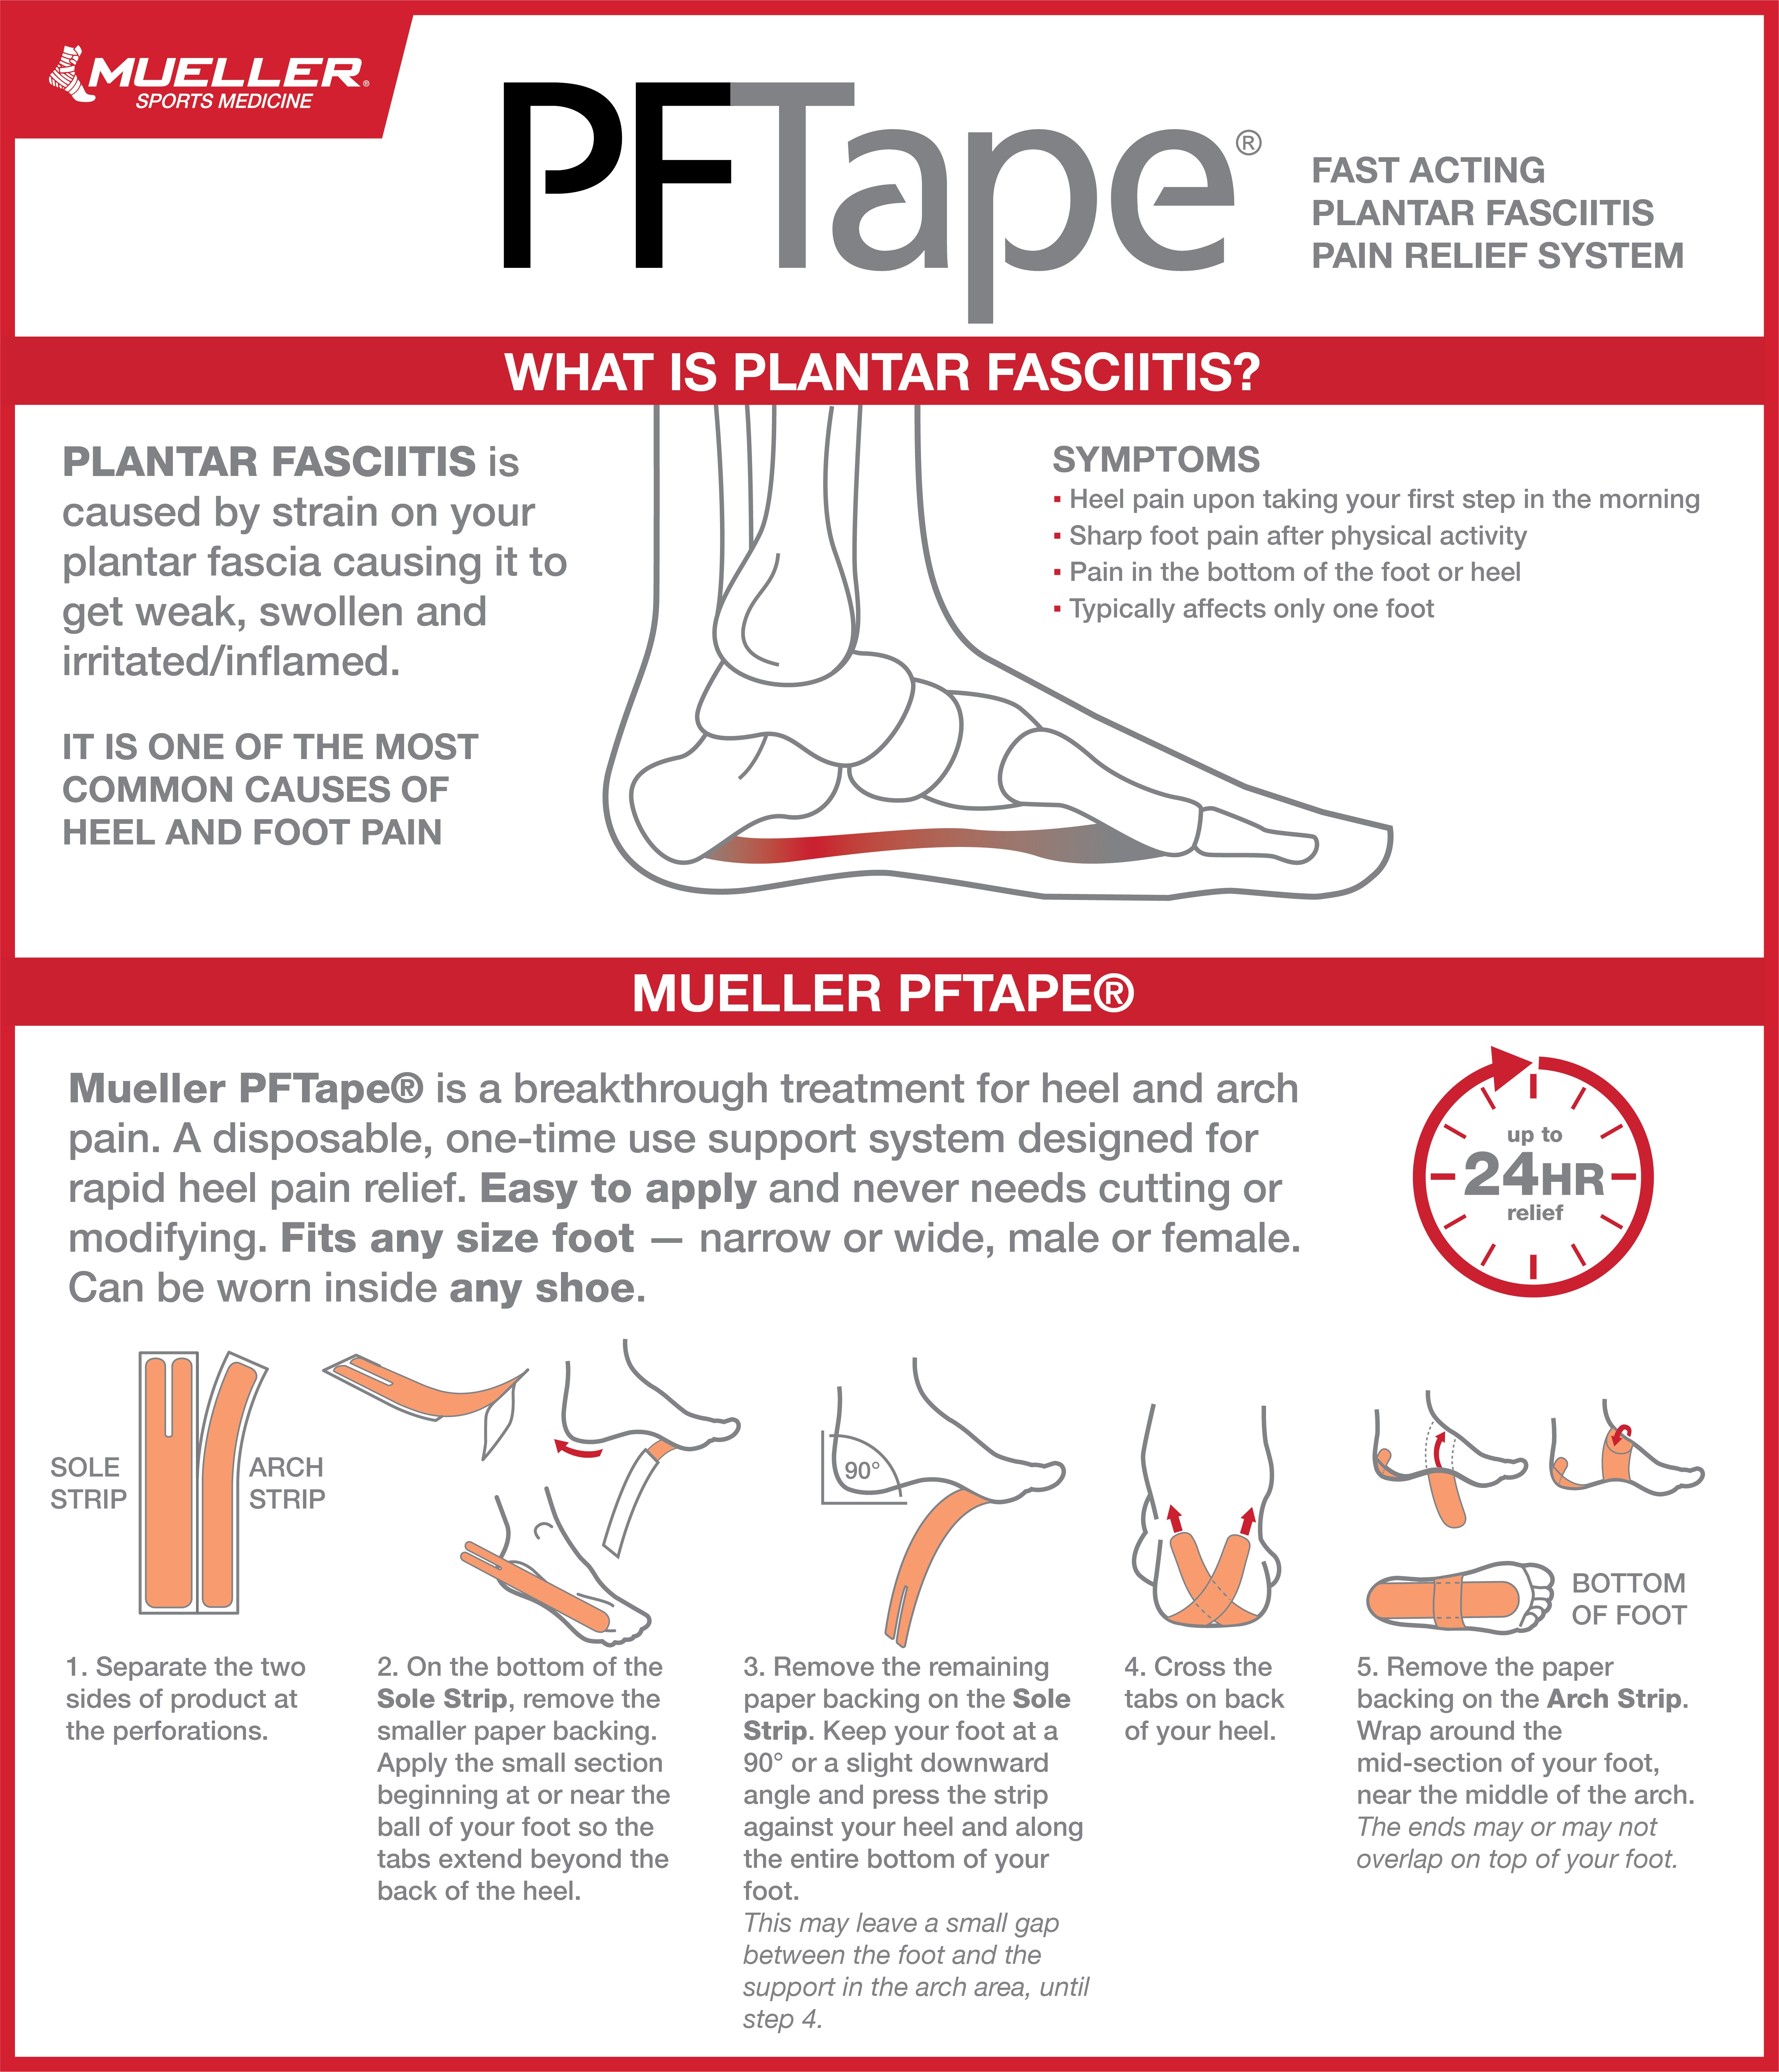 PFTape® Plantar Fasciitis Pain Relief System by Mueller Sports Medicine